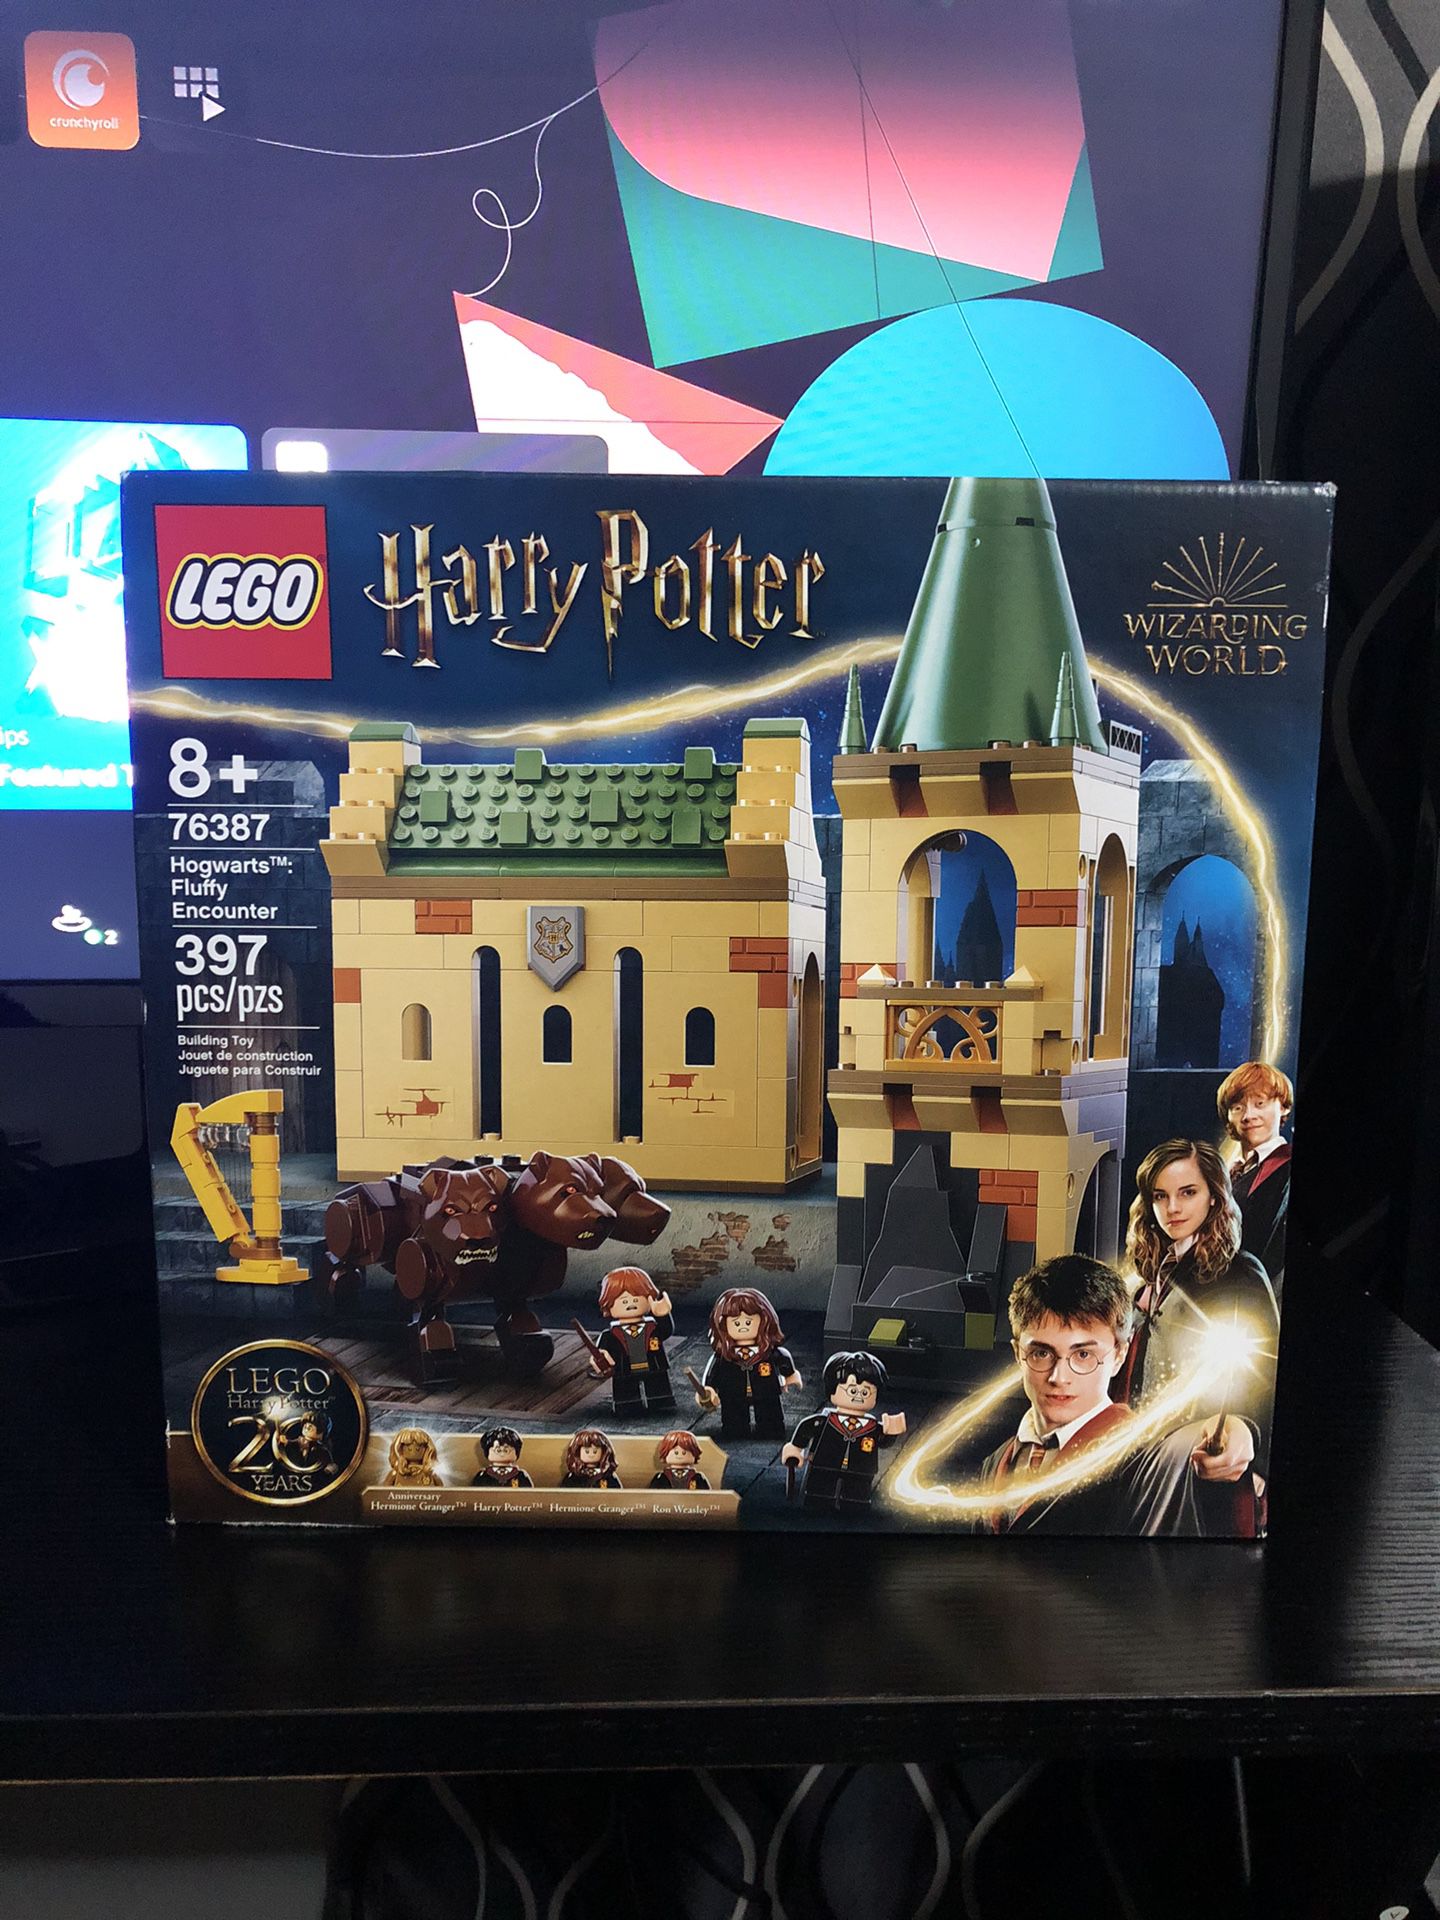 Harry Potter Fluffy encounter Lego set